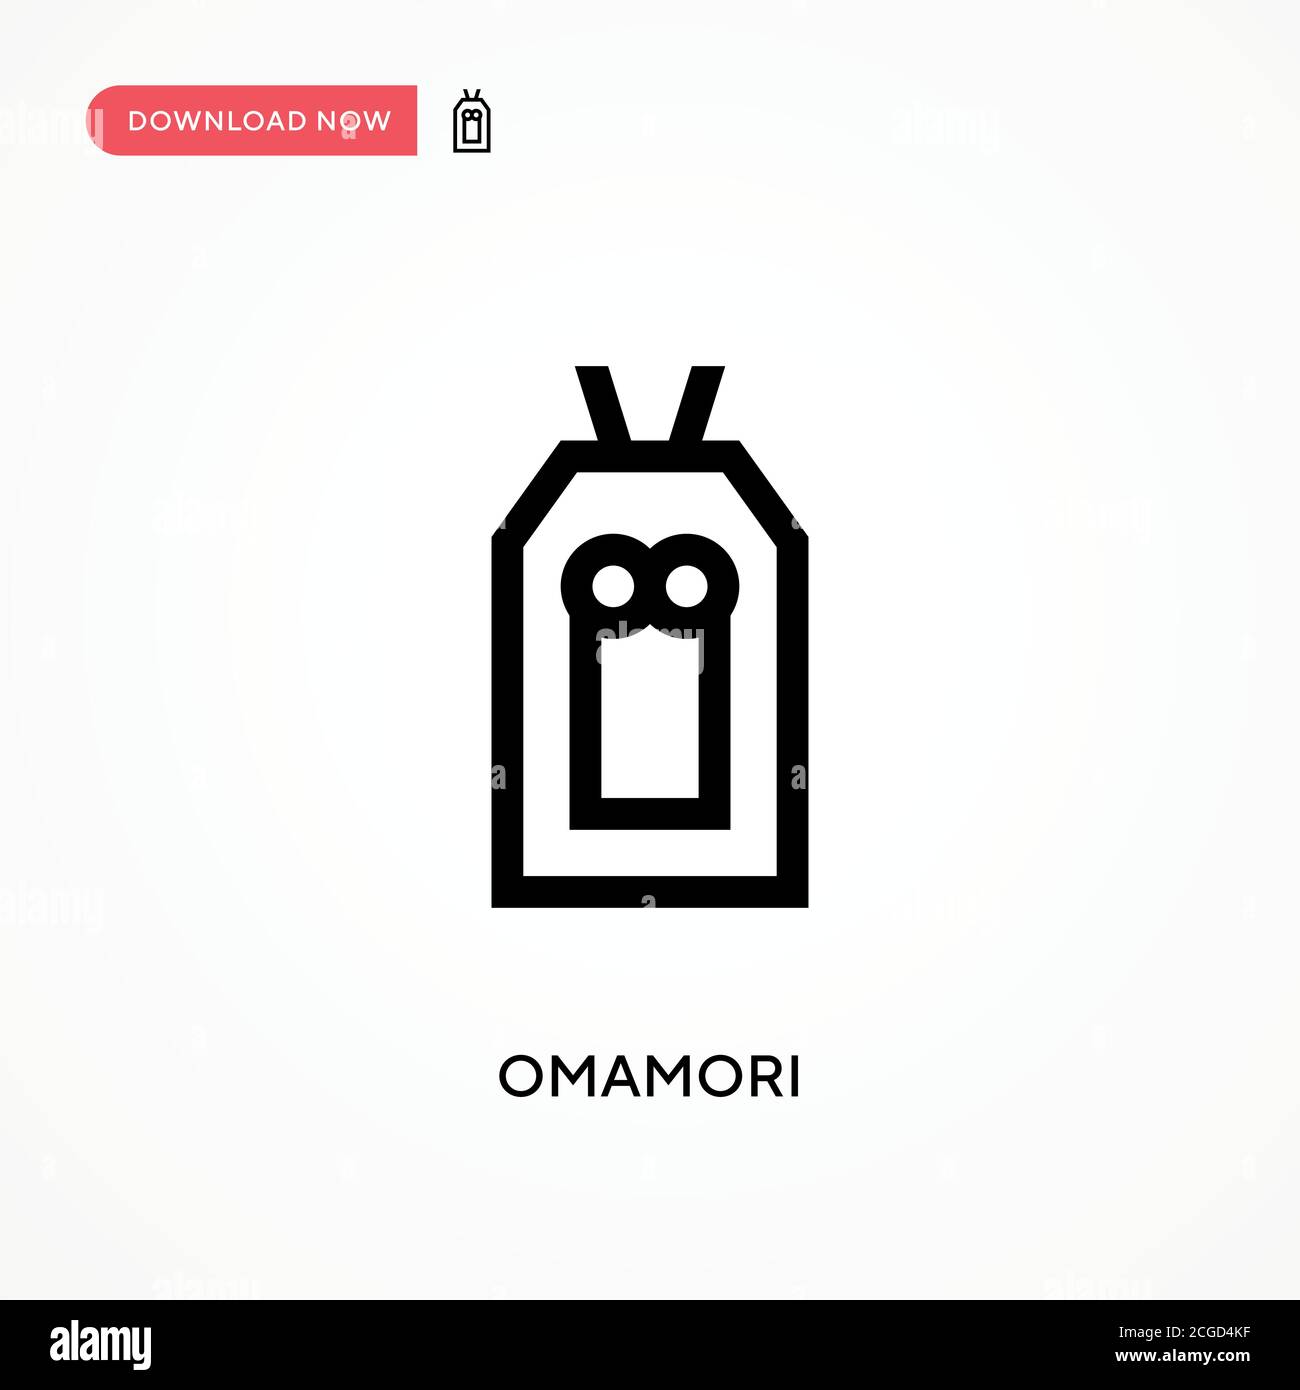 Einfaches Vektorsymbol Omamori. Moderne, einfache flache Vektor-Illustration für Website oder mobile App Stock Vektor